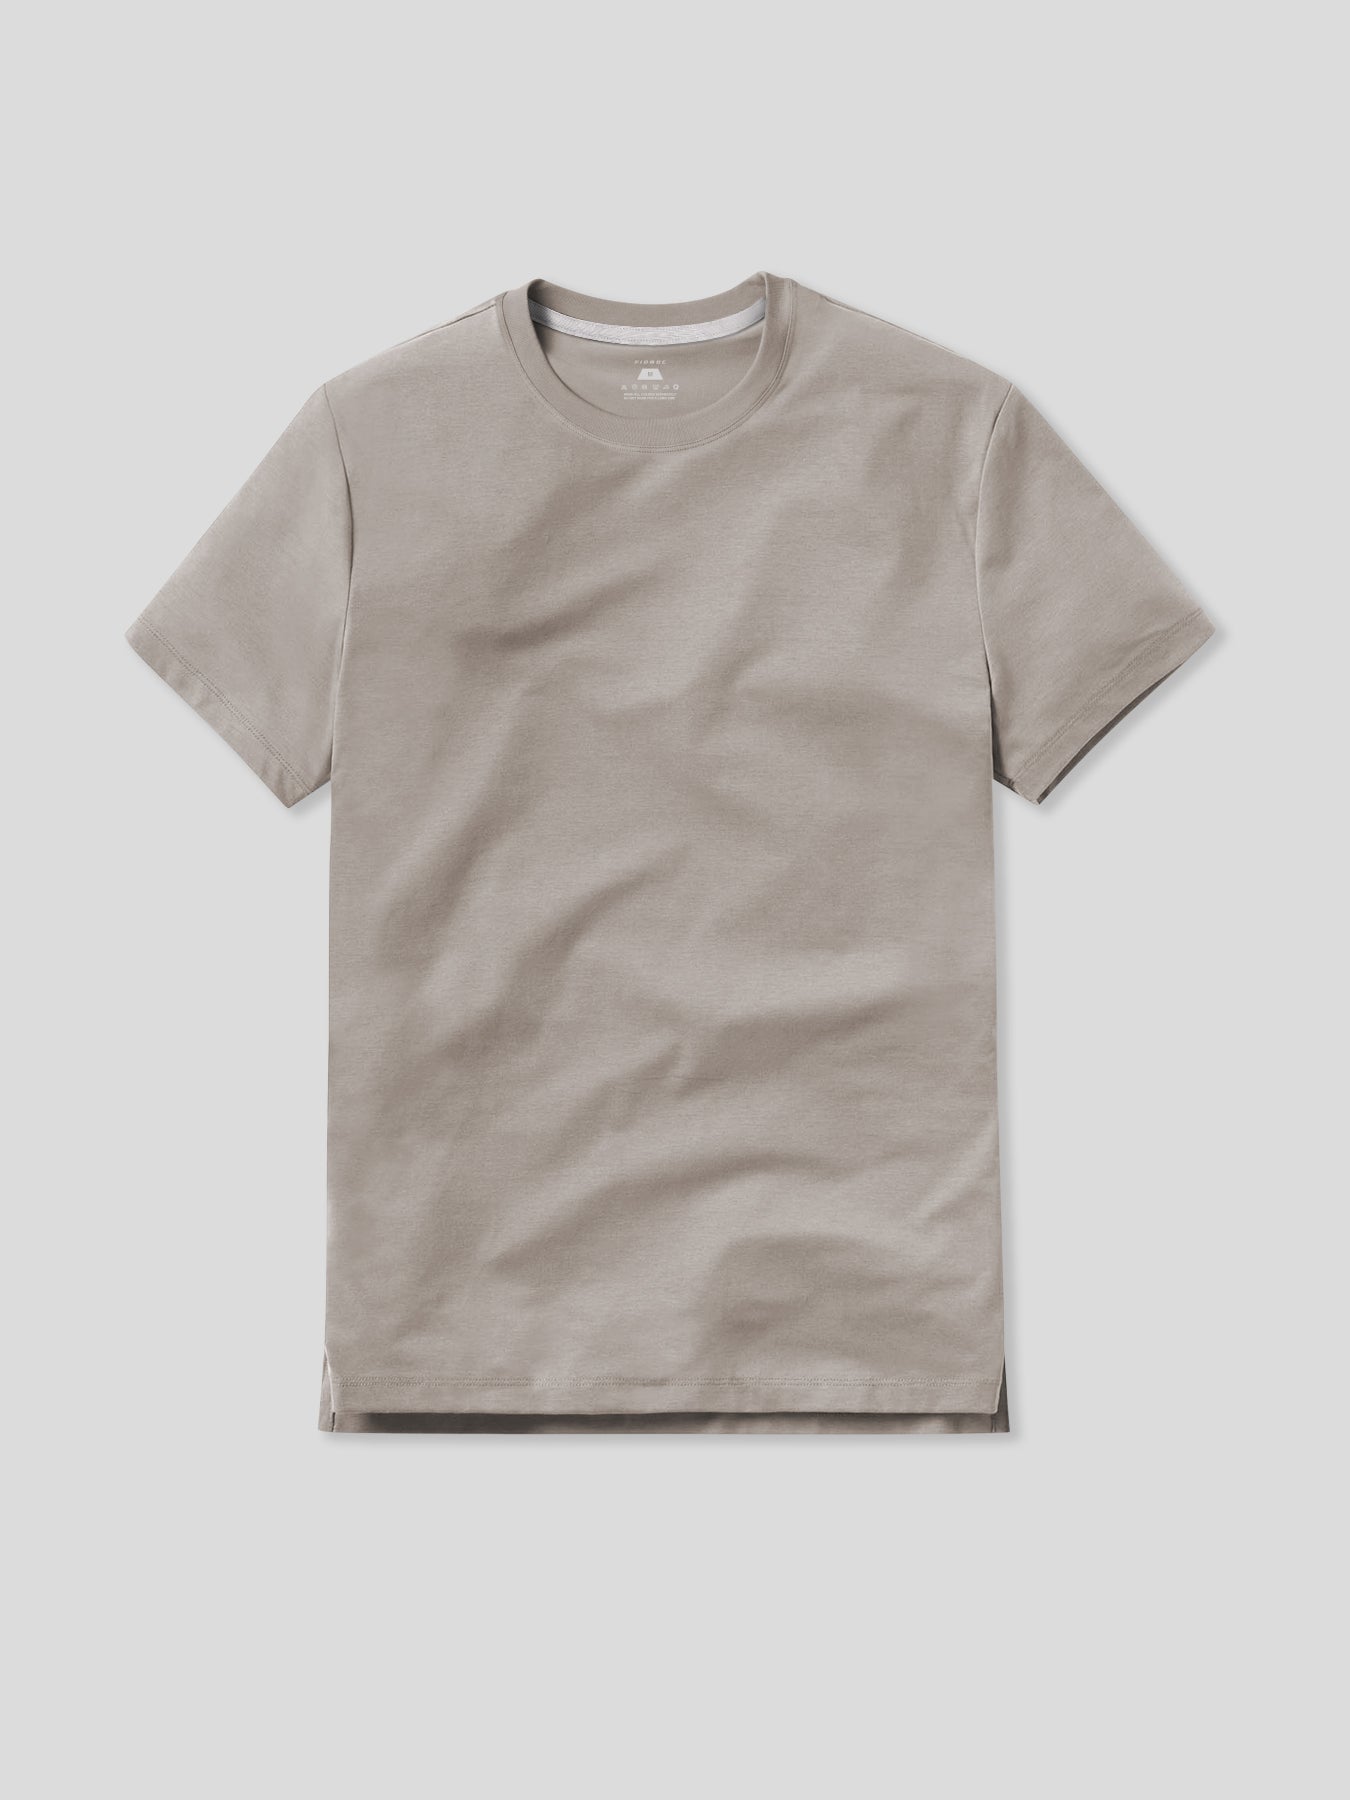 StayCool 2.0 Slim Fit T-Shirt mit geteiltem Saum